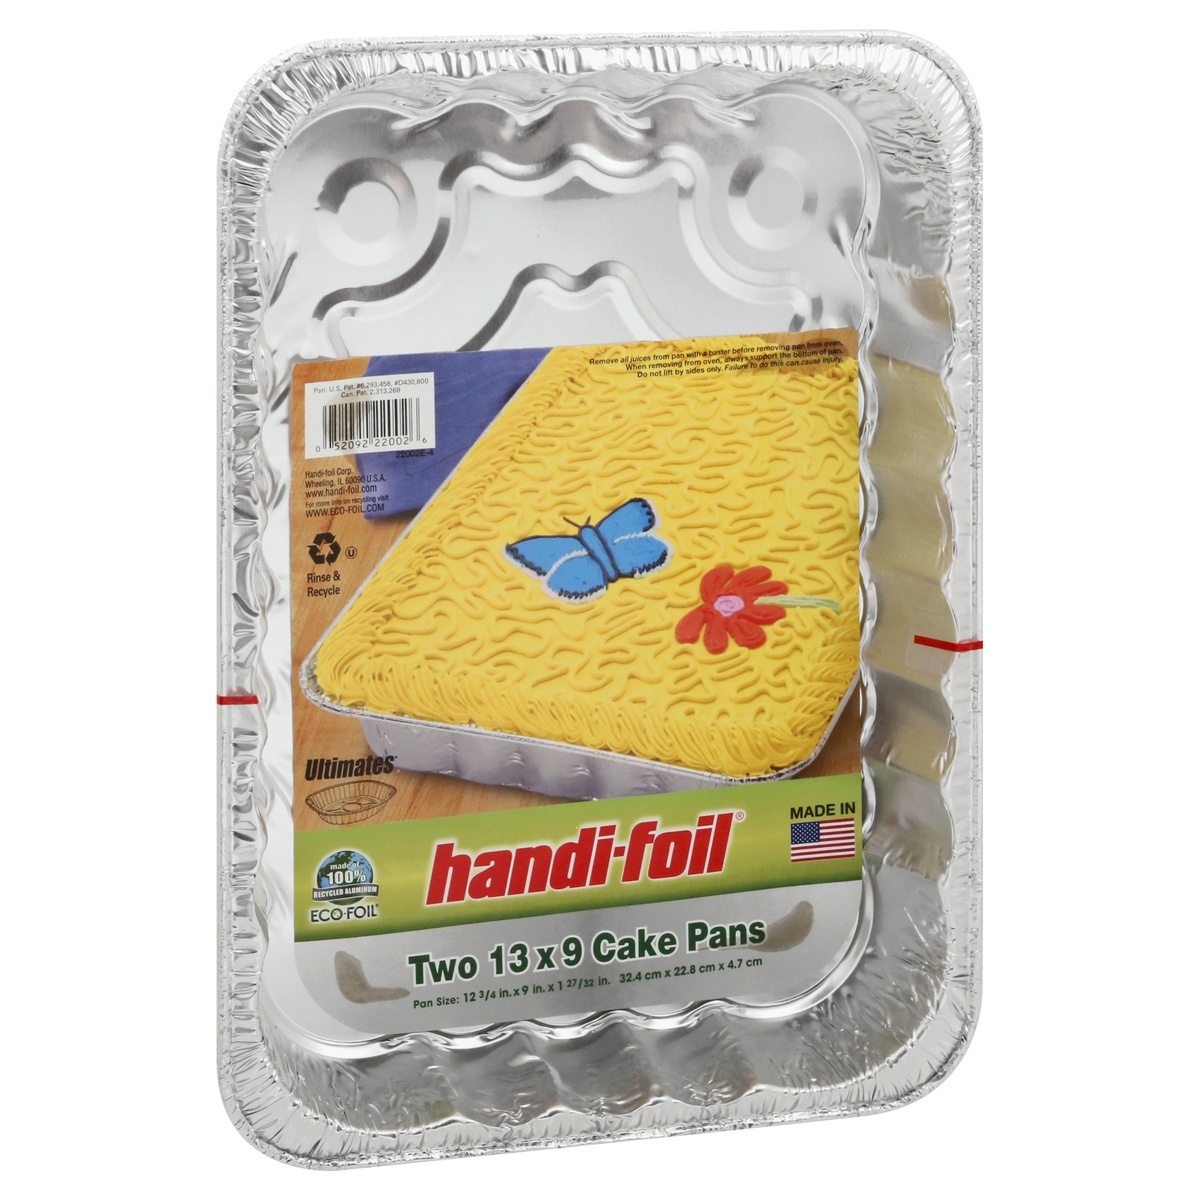 slide 8 of 9, Handi-foil Eco-Foil Cake Pans 13x9, 2 ct